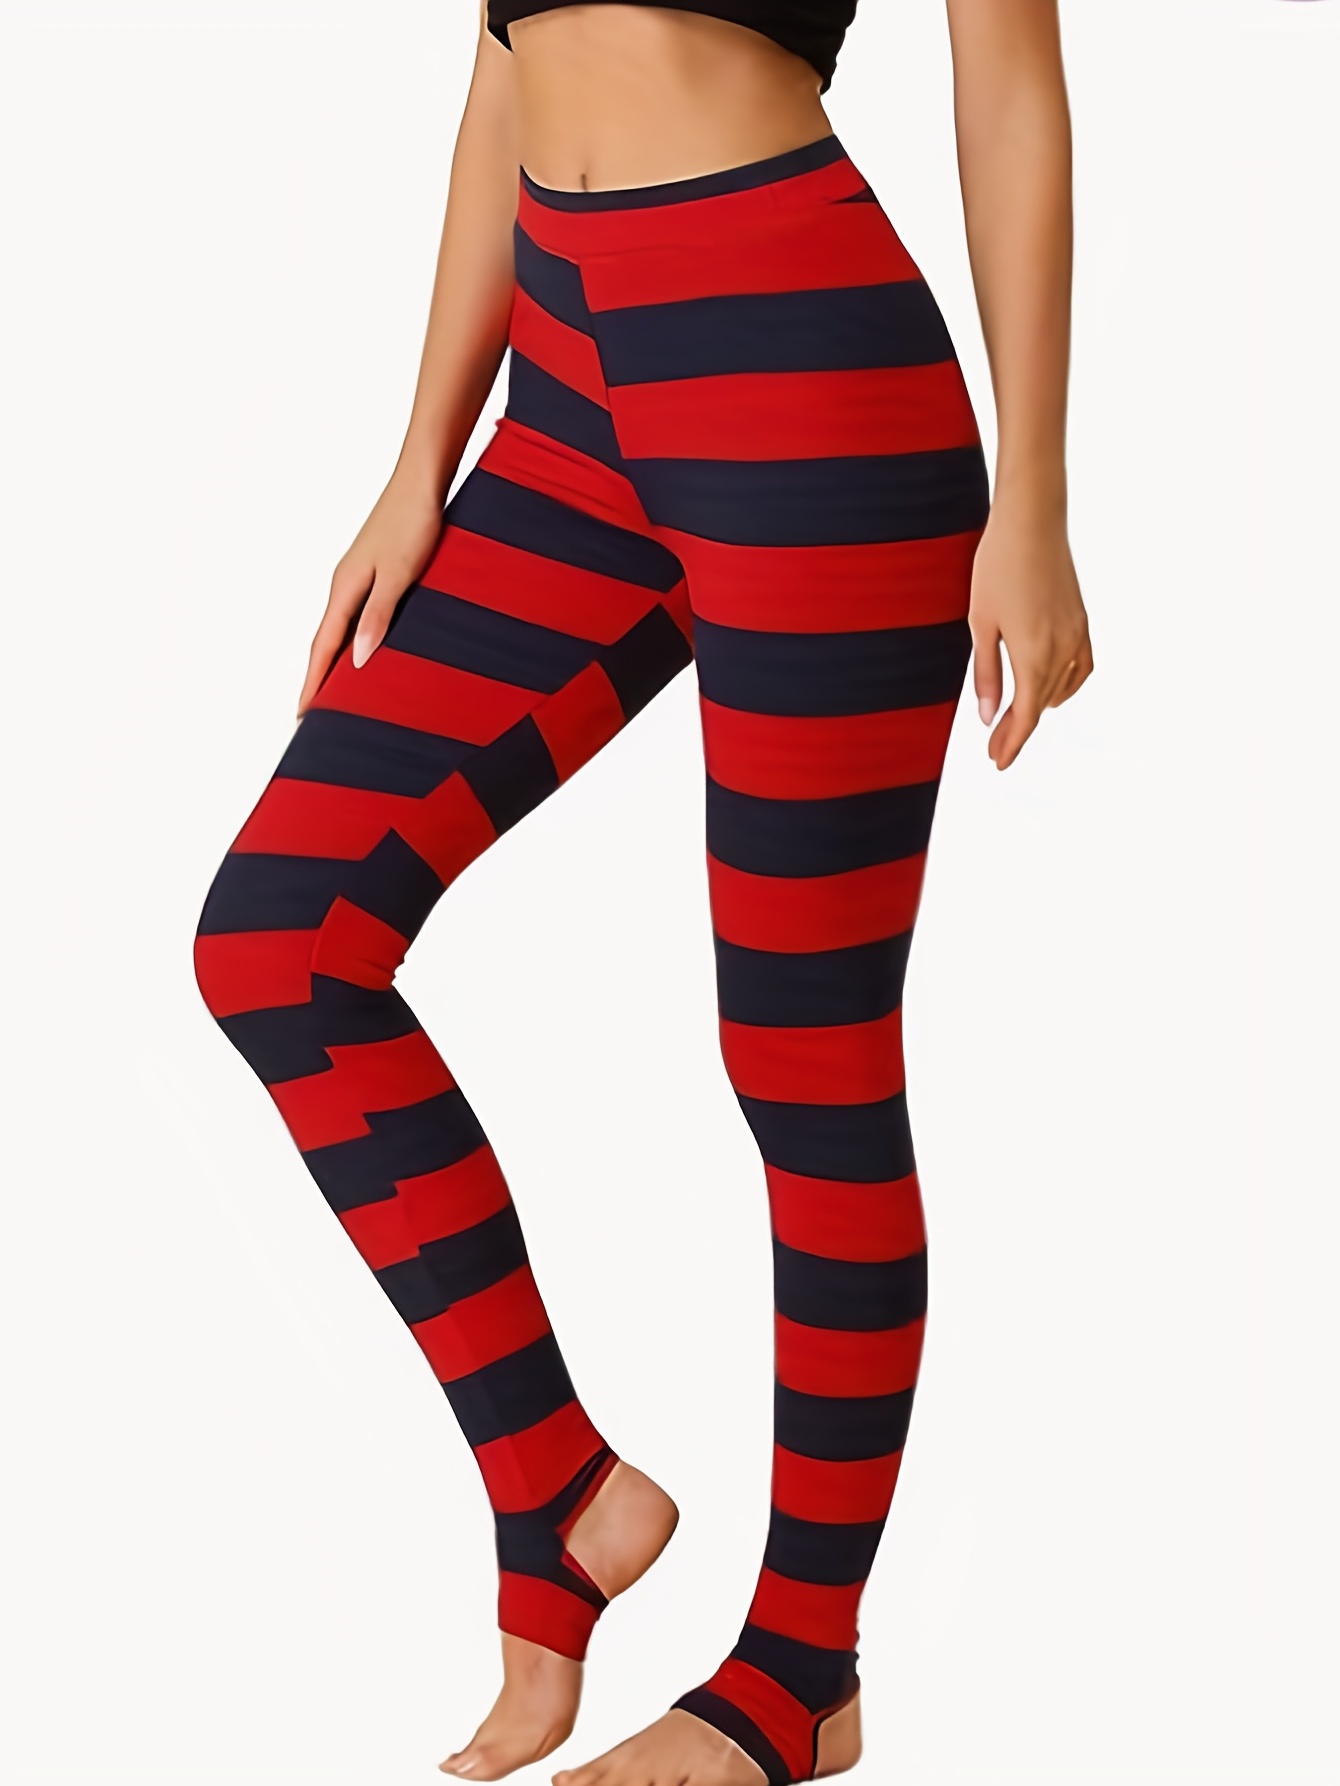 Black and Red High Waist Side Stripe Leggings